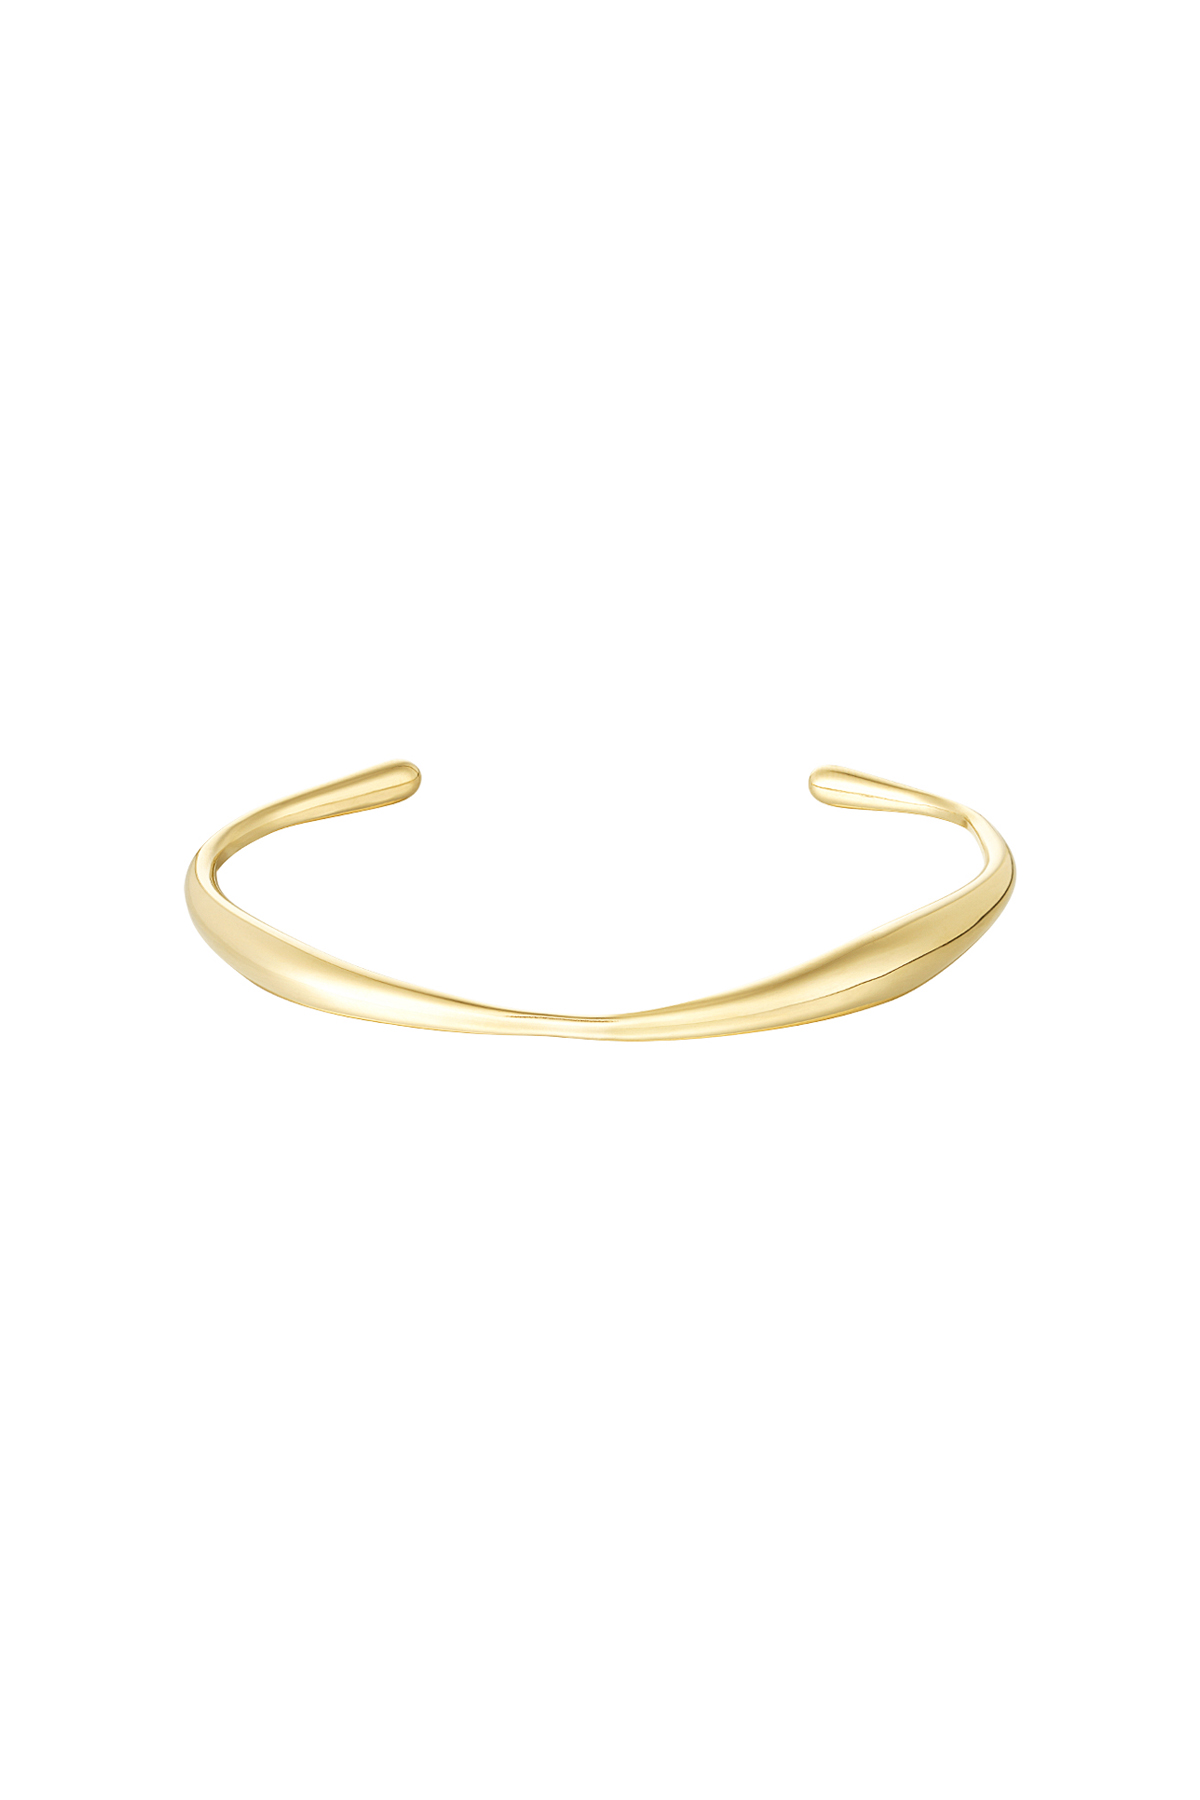 Organic shape bracelet - gold h5 